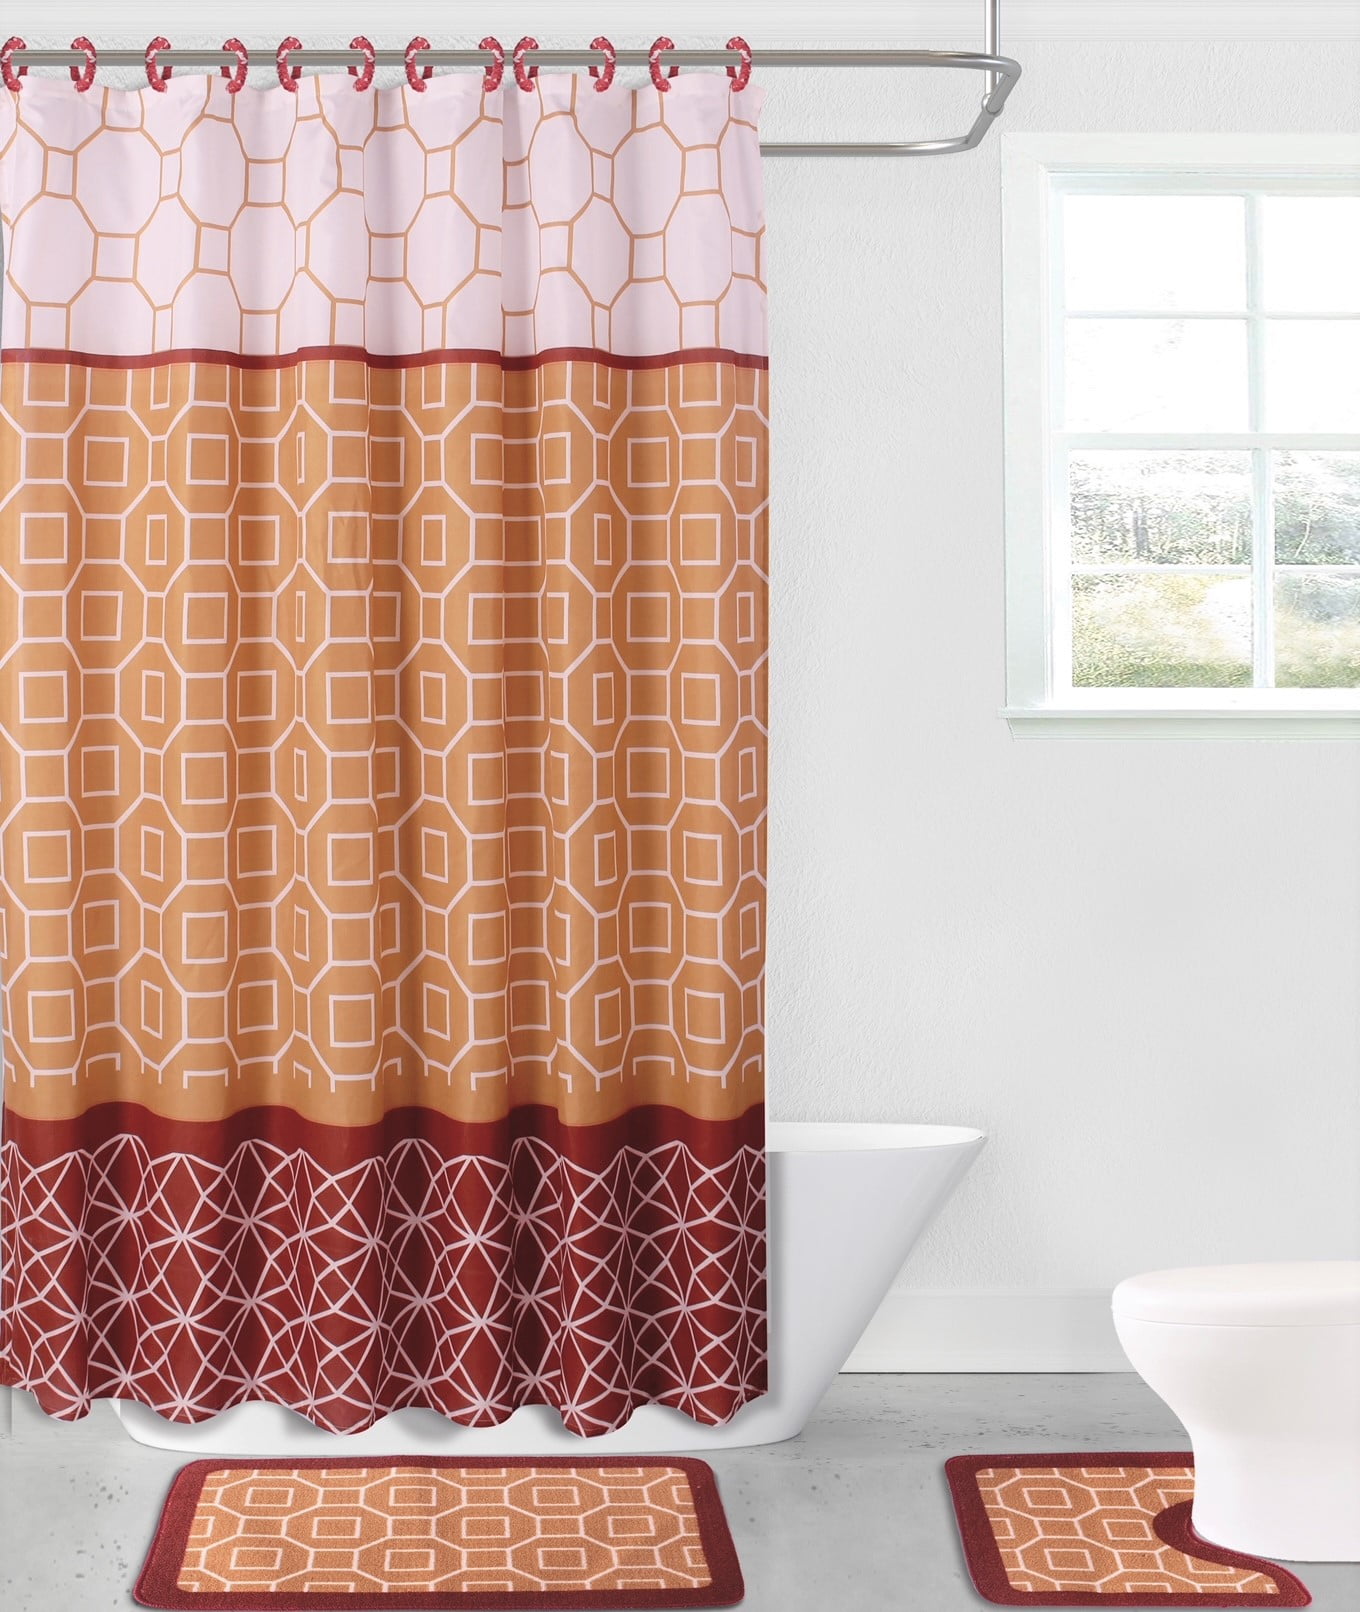 Historic Route 66 Shower Curtain Liner Waterproof Fabric Bathroom Mat Set Hooks 